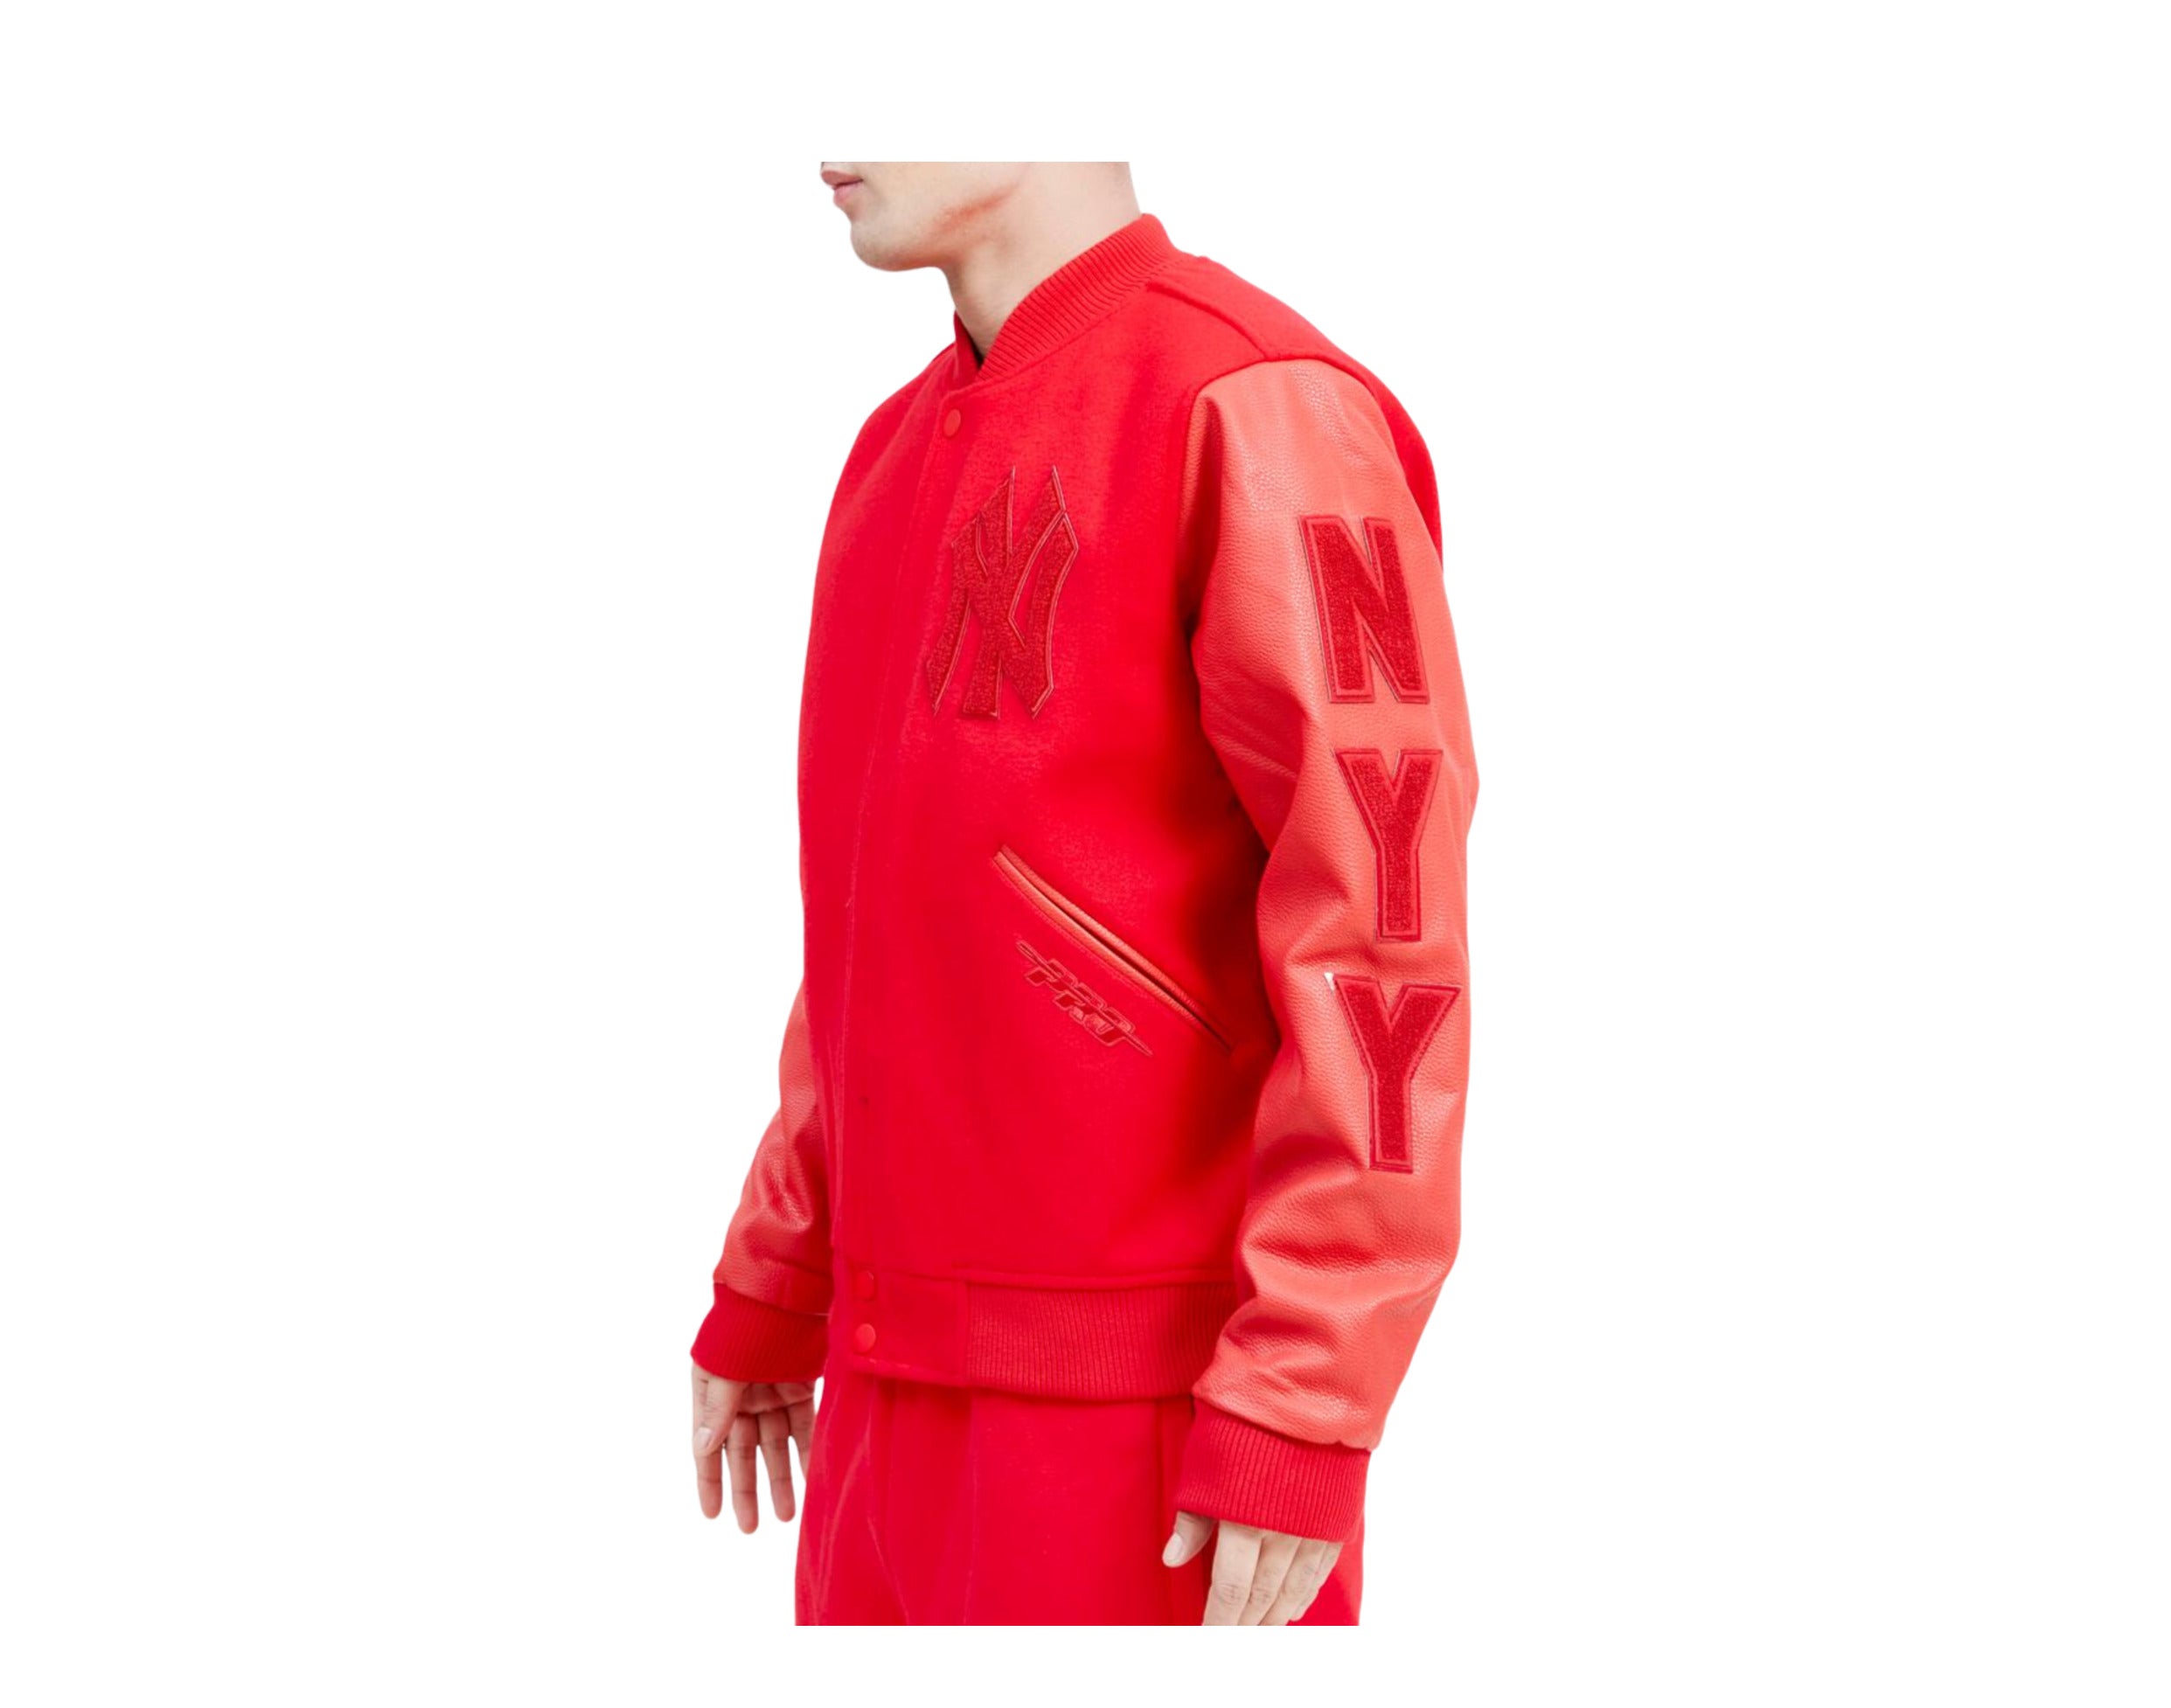 MLB St. Louis Cardinals Red Wool Varsity Jacket